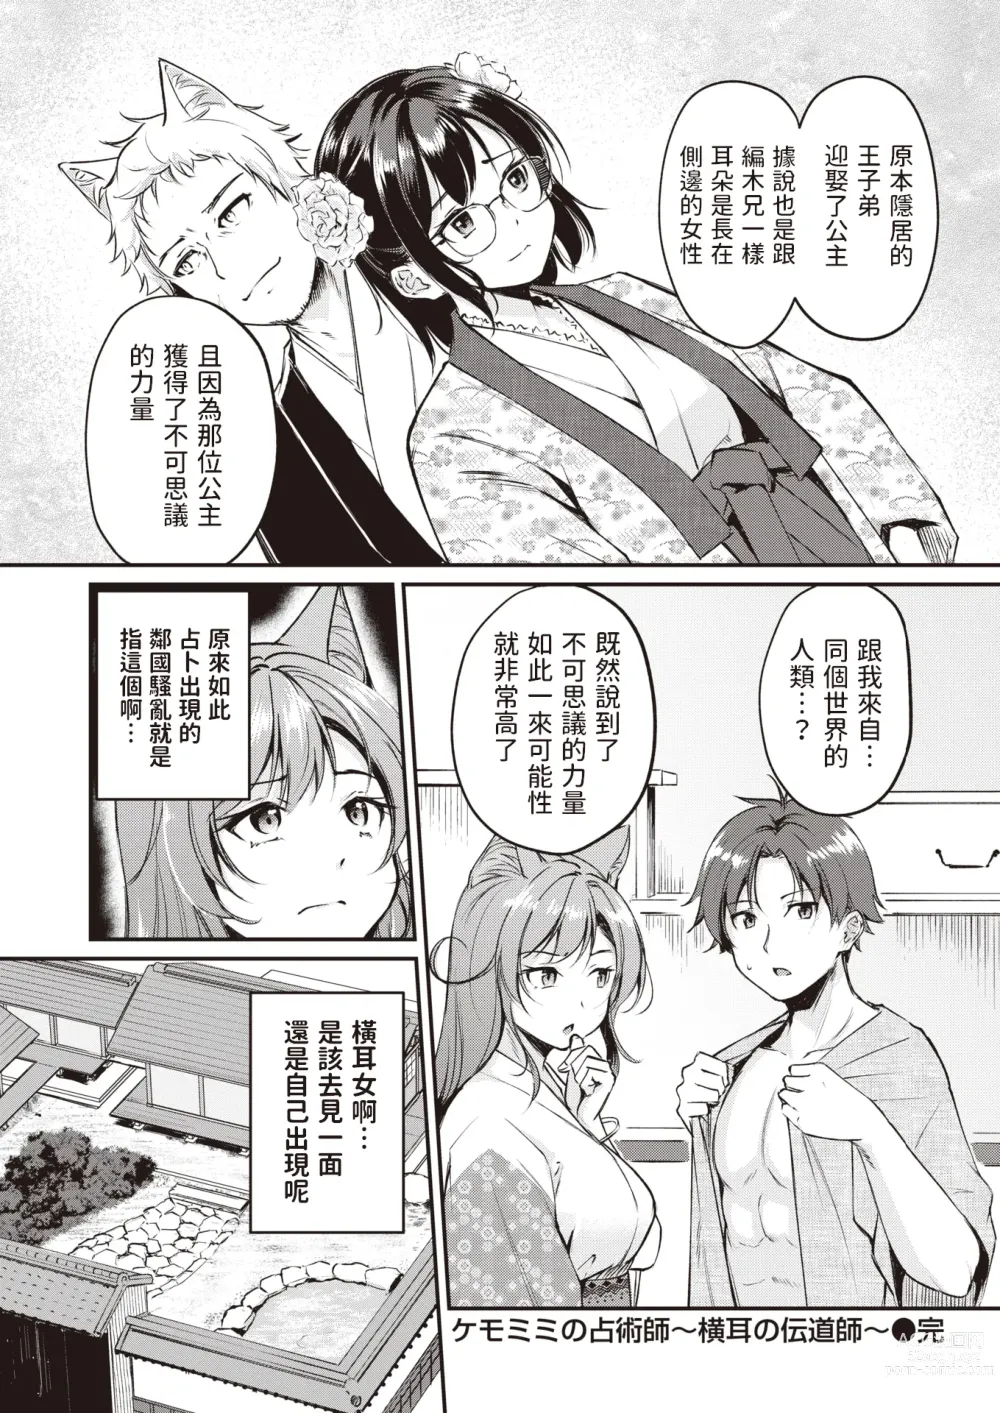 Page 26 of manga Kemomimi no Senjutsushi ~Yoko Mimi no Dendoushi~